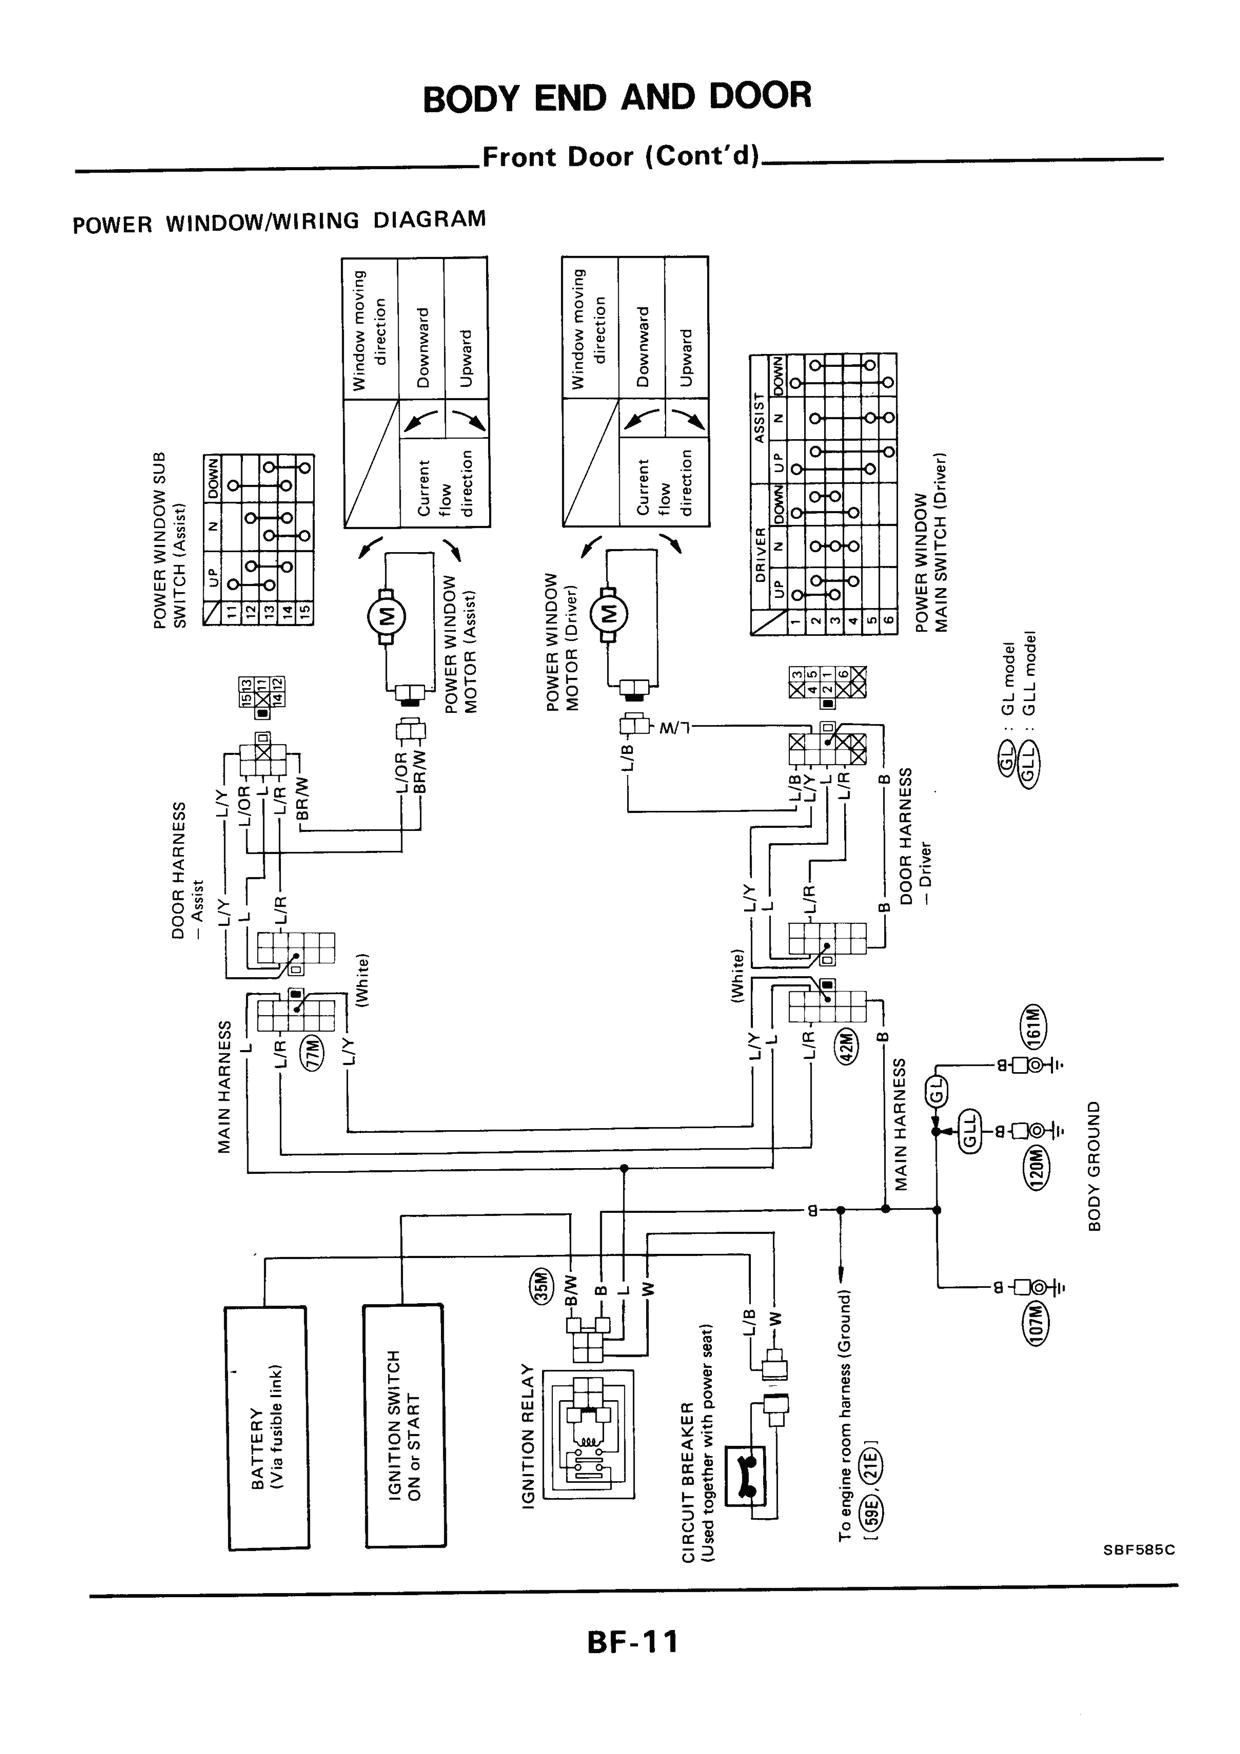 keystone rv wiring schematic wiring diagram keystone cougar inspirational rv holding tank wiring diagram unique wiring diagram od rv park 8b jpg